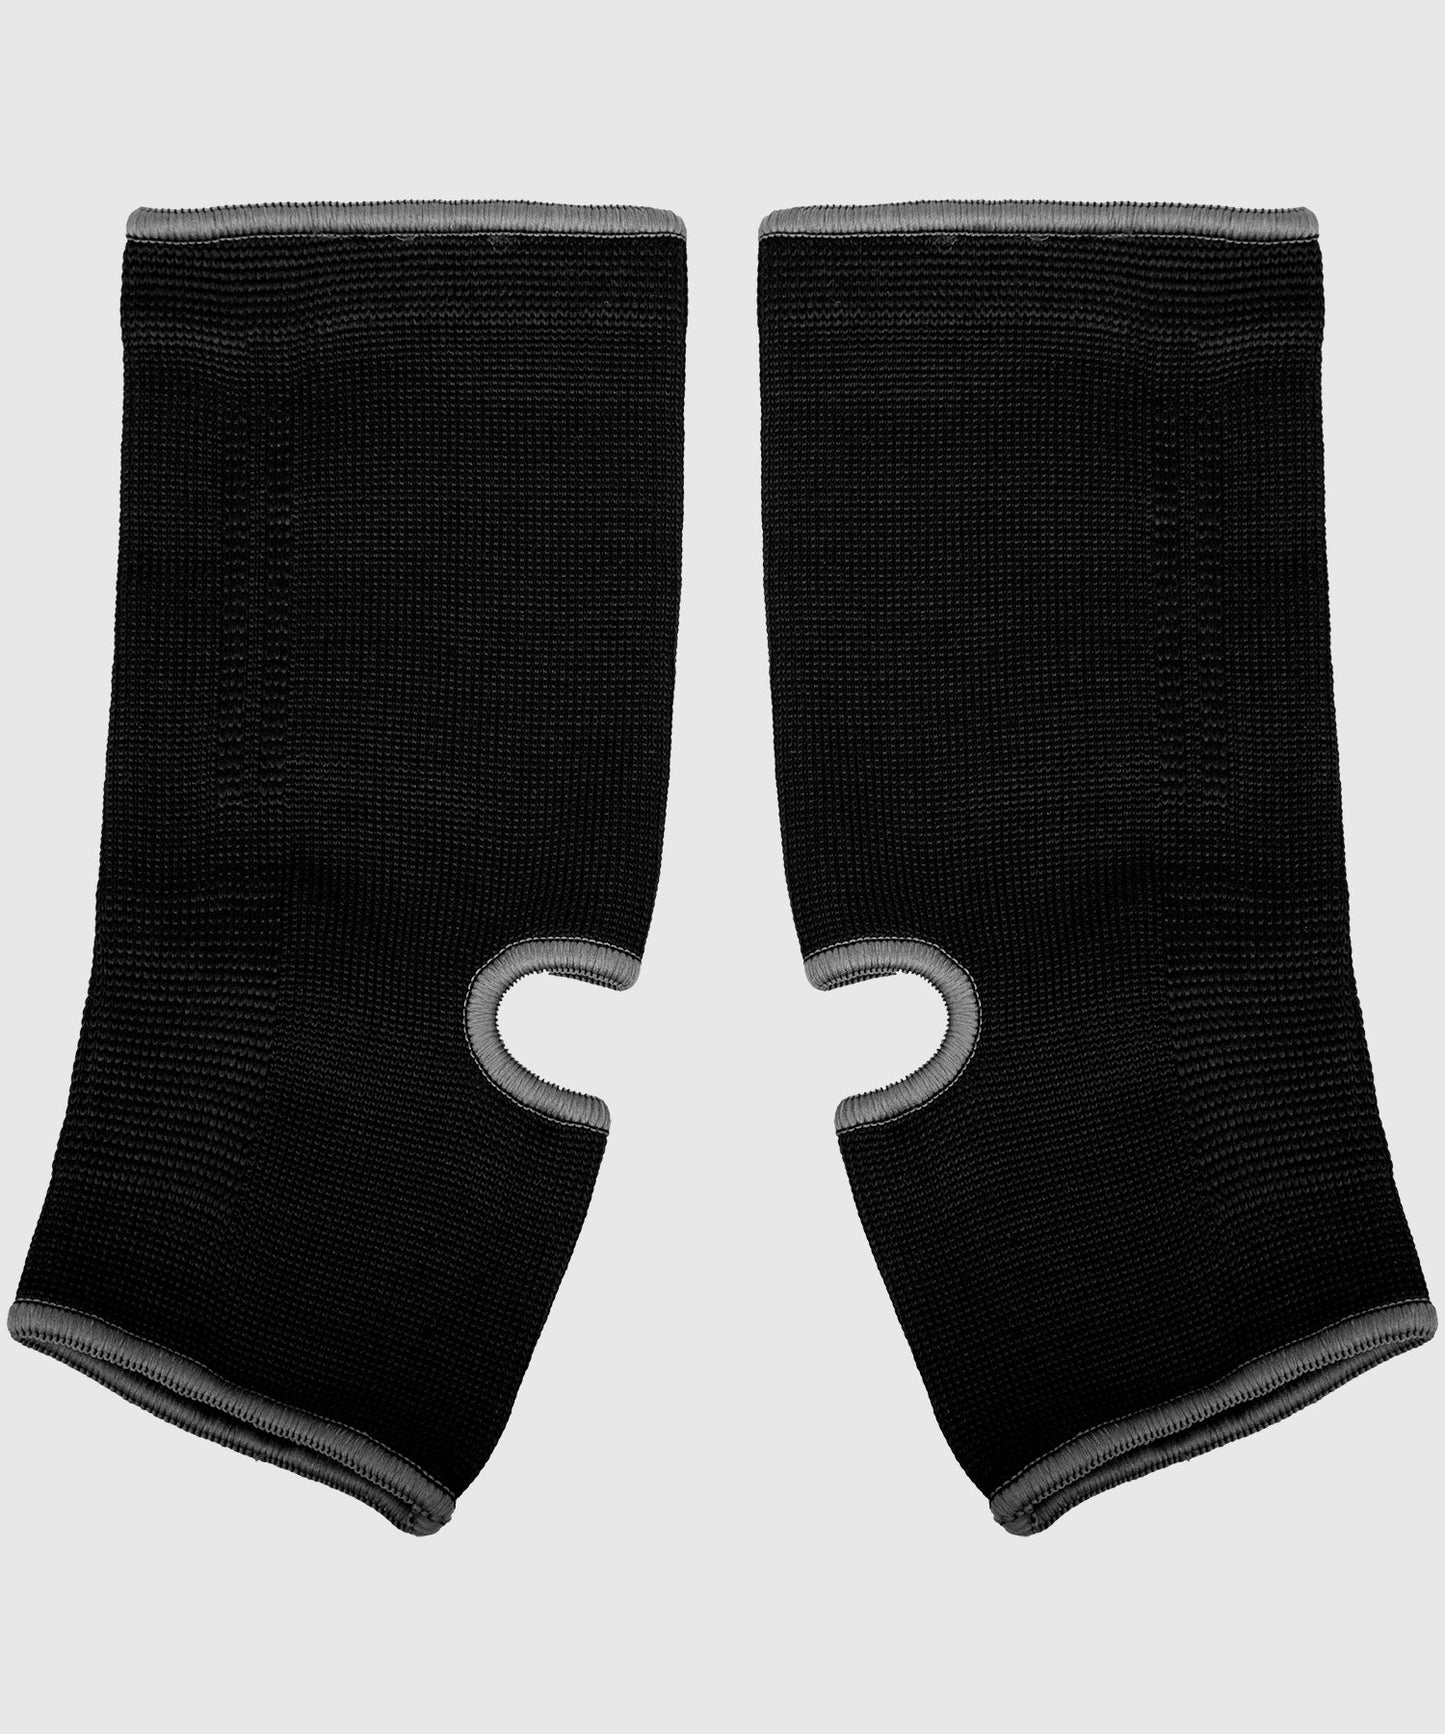 Venum Kontact Ankle Support Guards - Black/Black